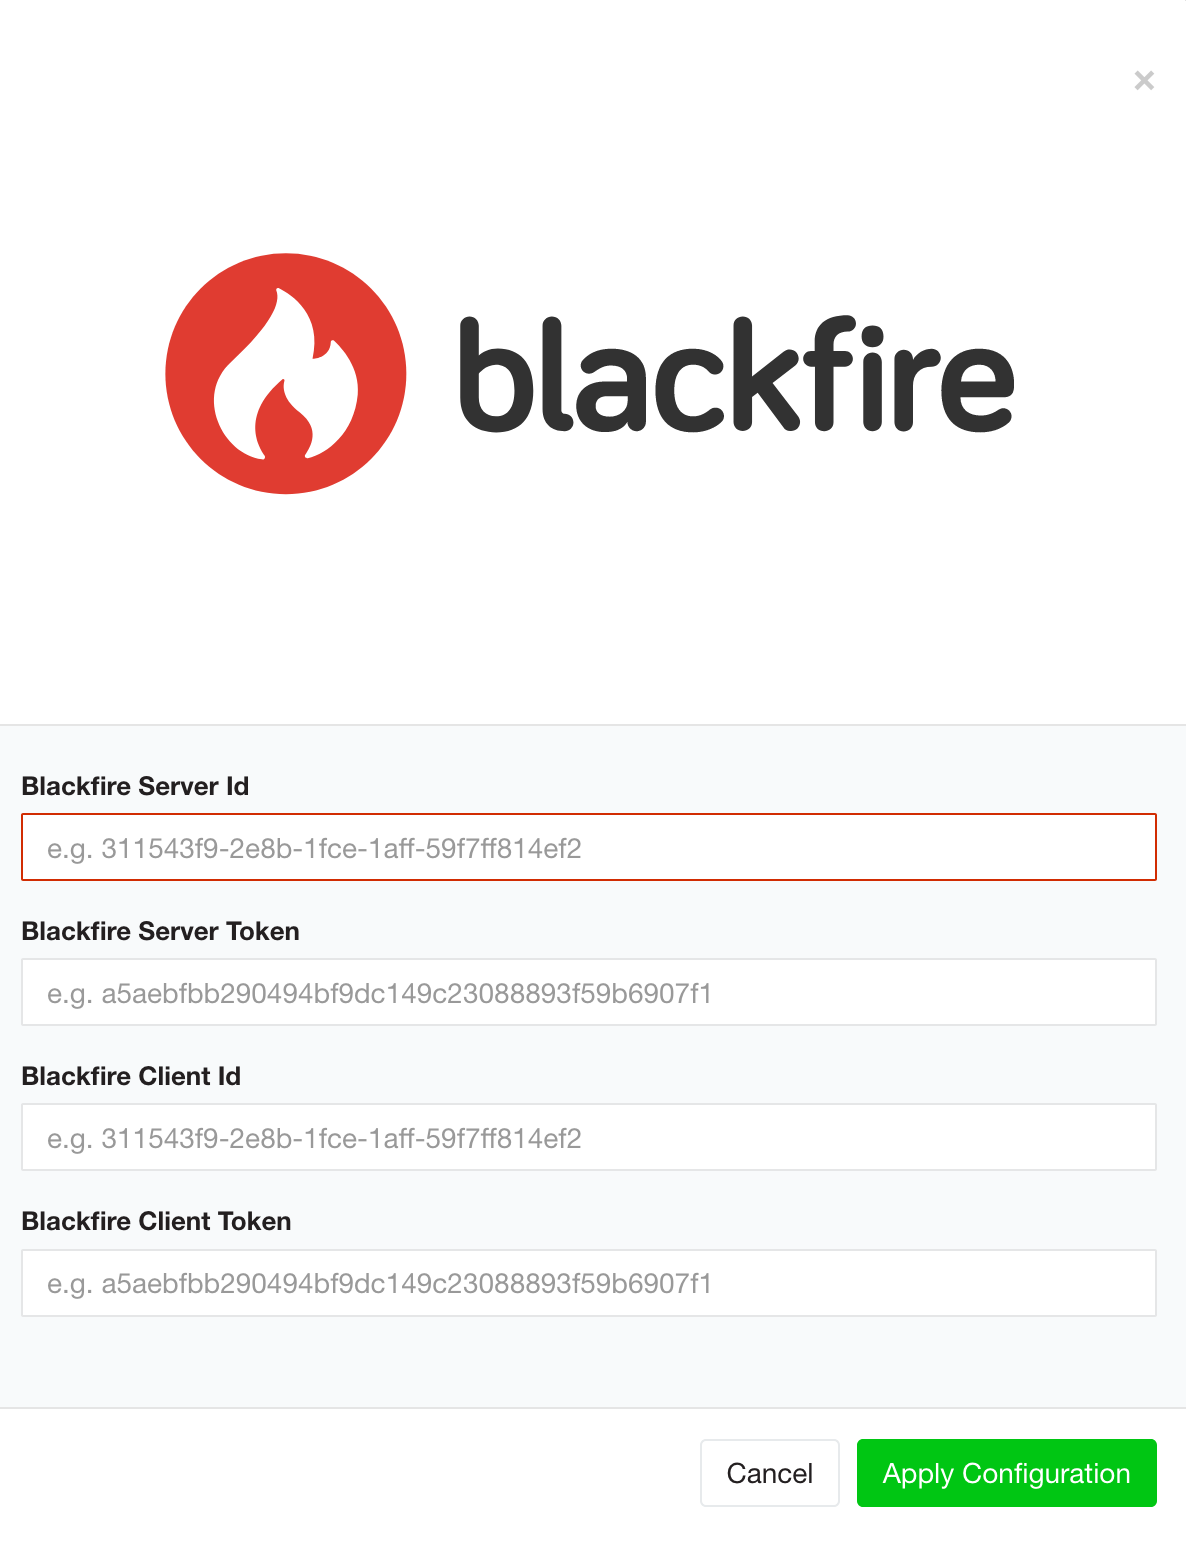 Blackfire profiling configuration